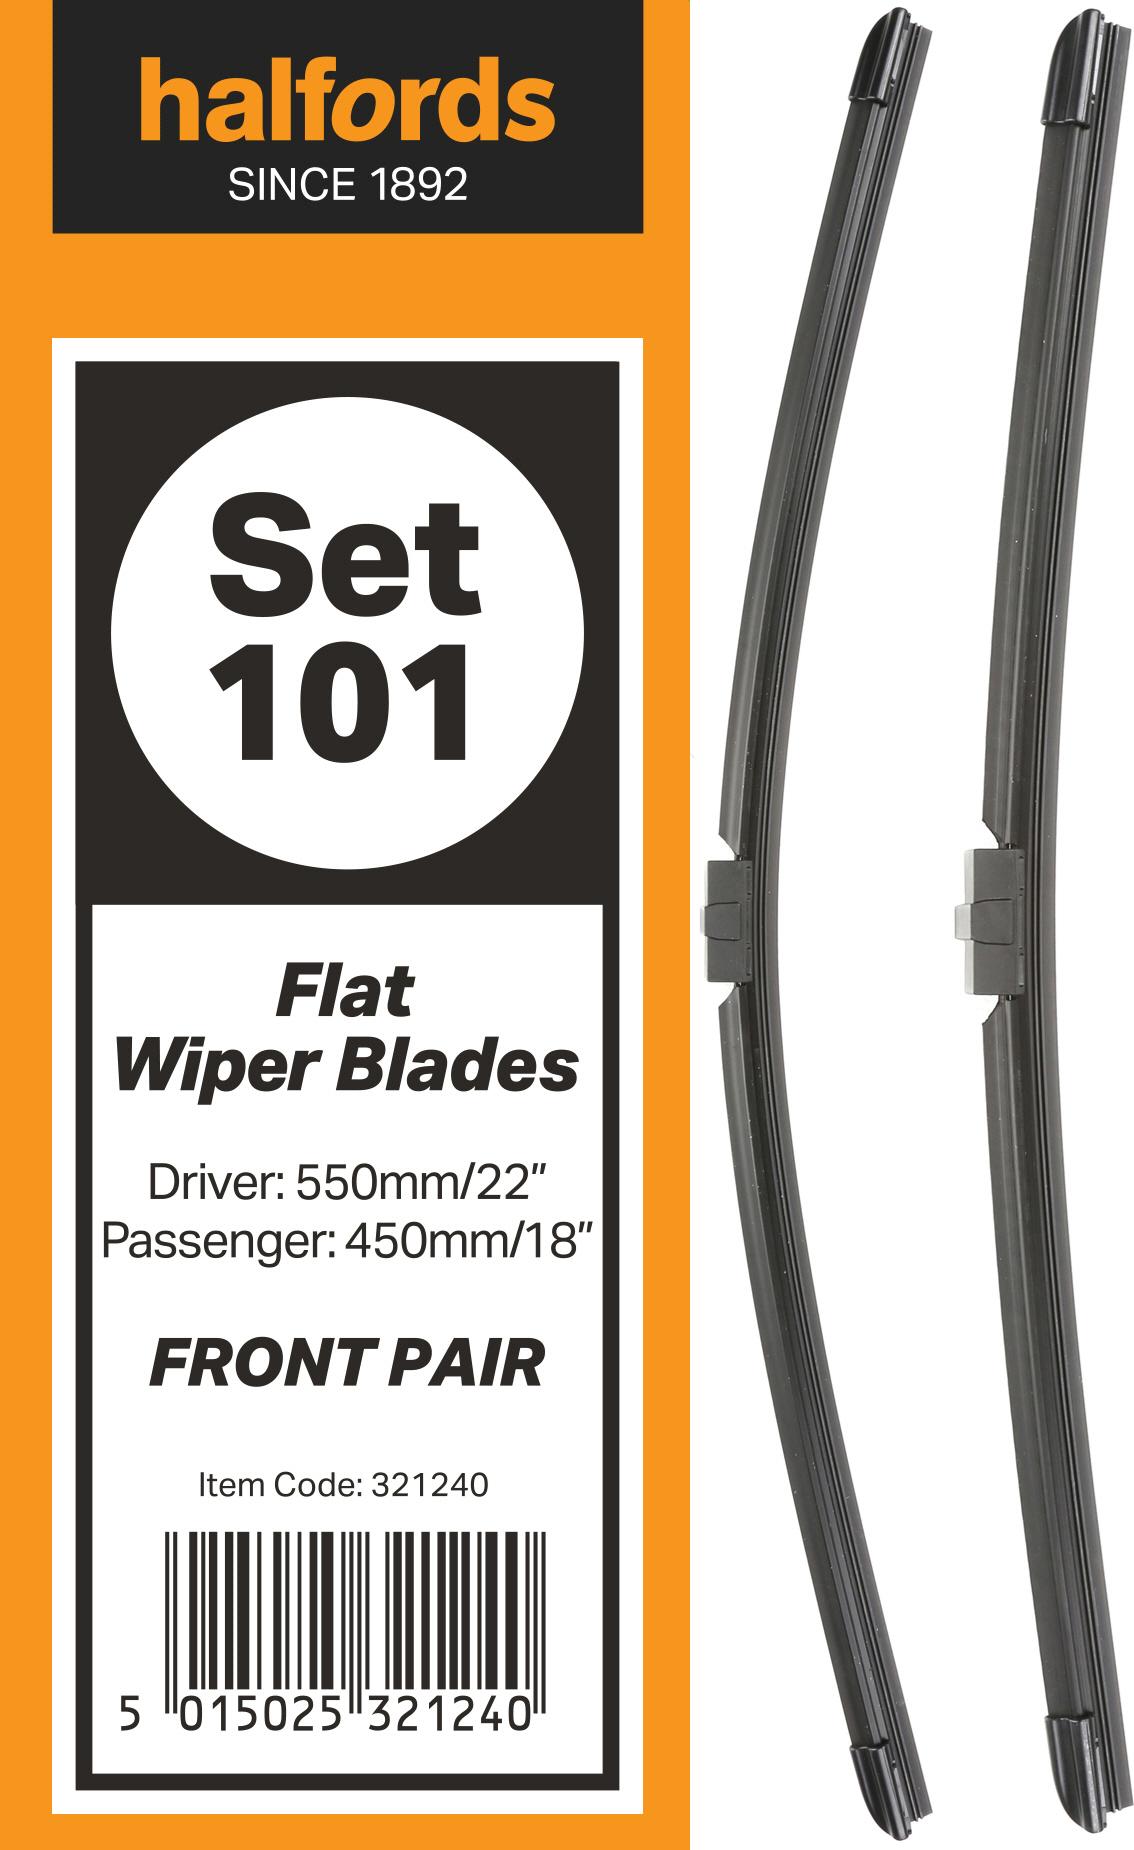 Halfords Set 101 Wiper Blades - Front Pair